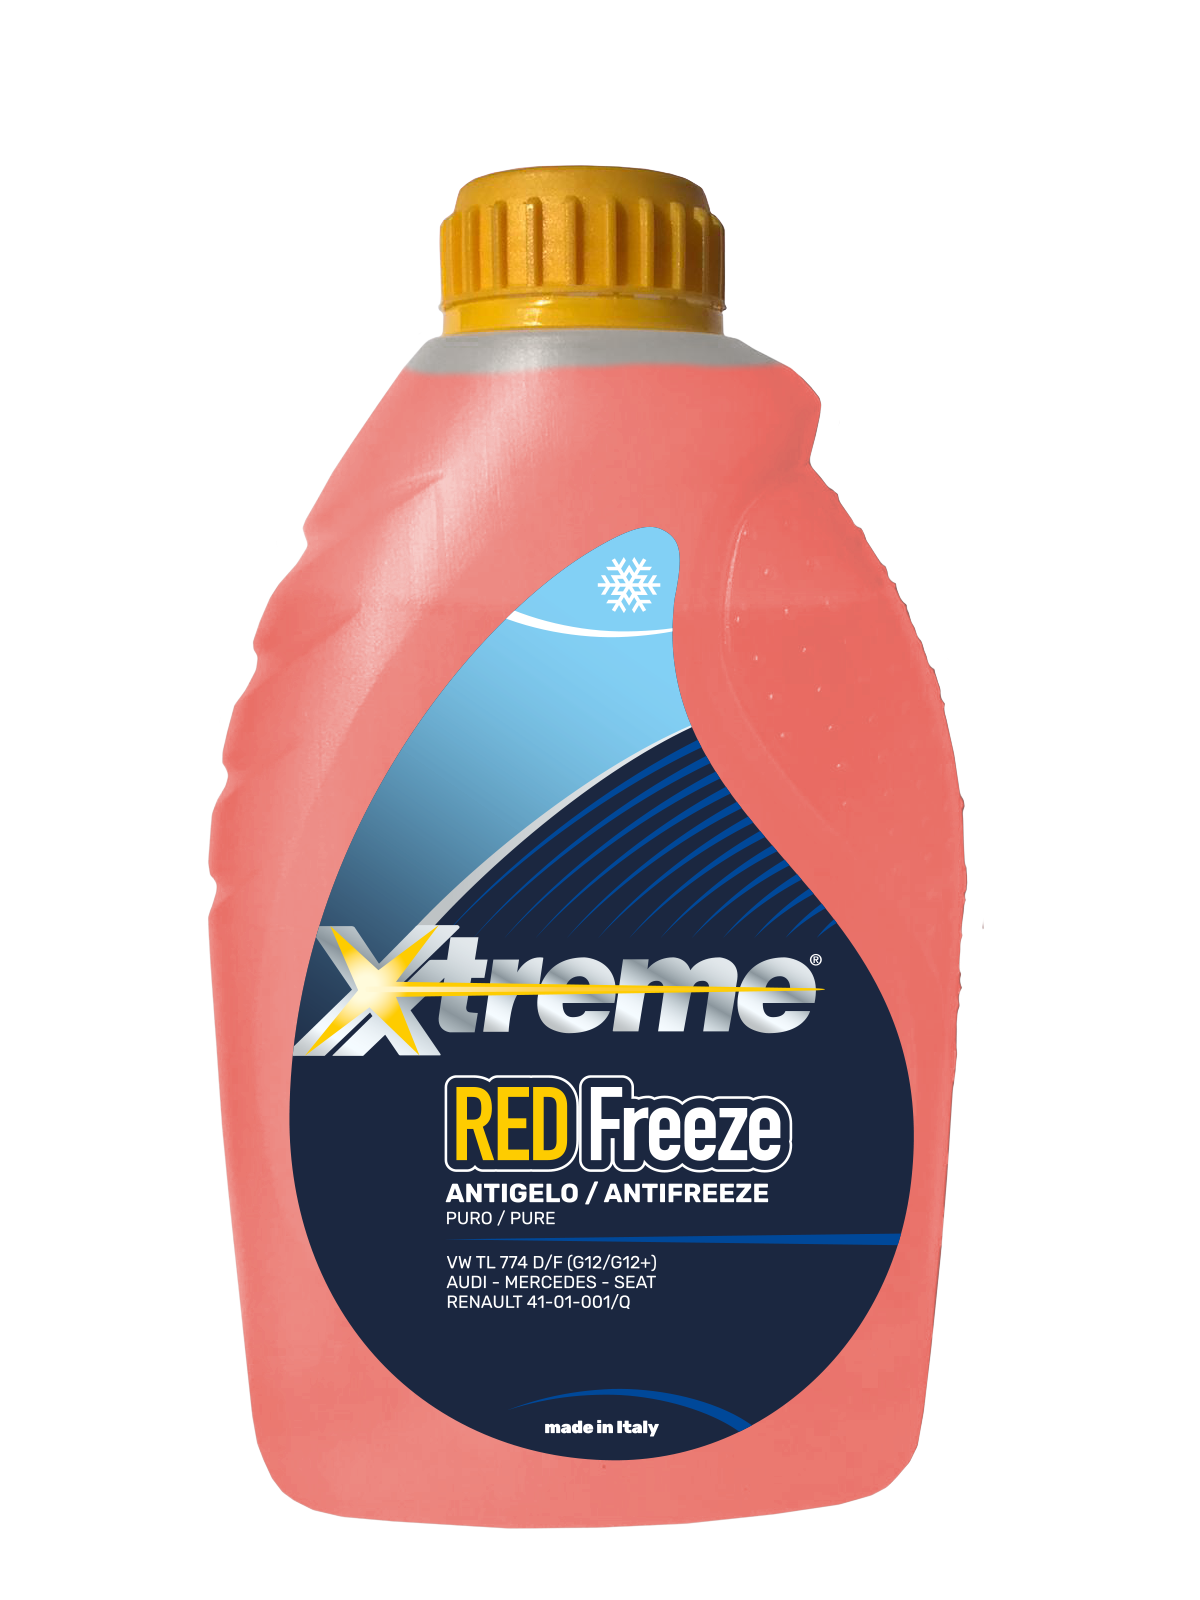 Xtreme REDfreeze – Axxonoil